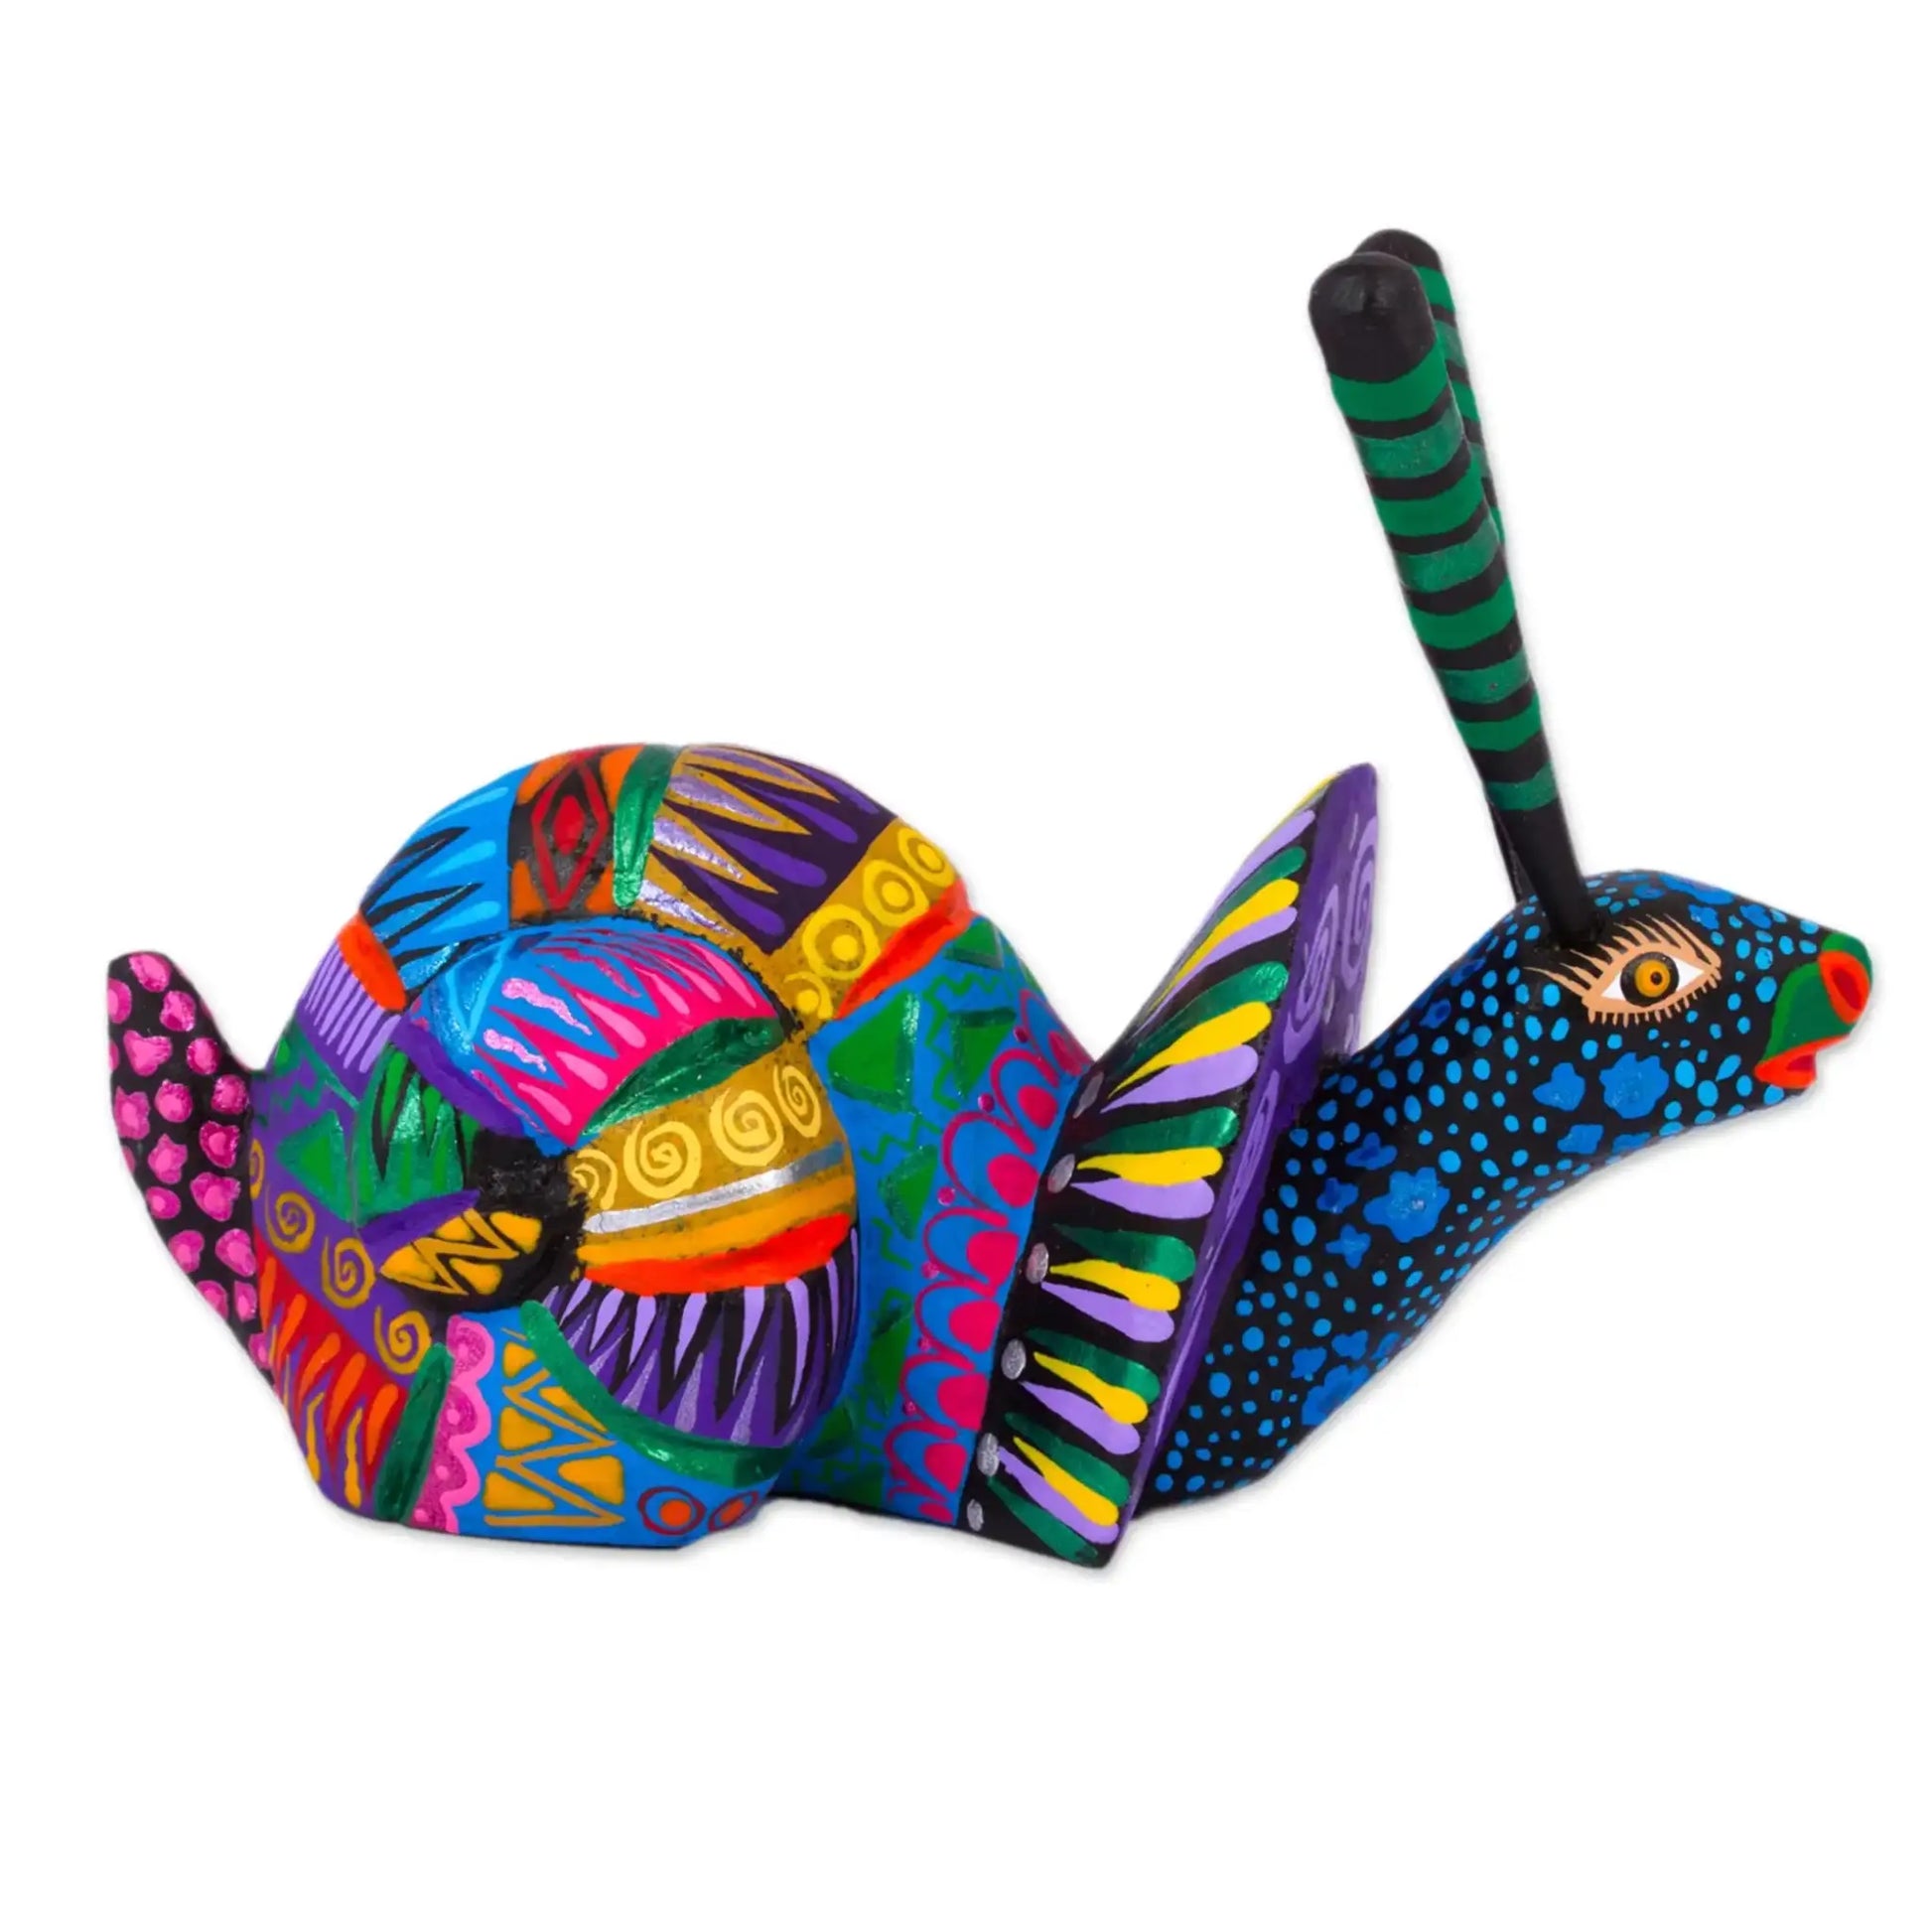 Rainbow Snail - Multicolored Wood Alebrije Figurine from